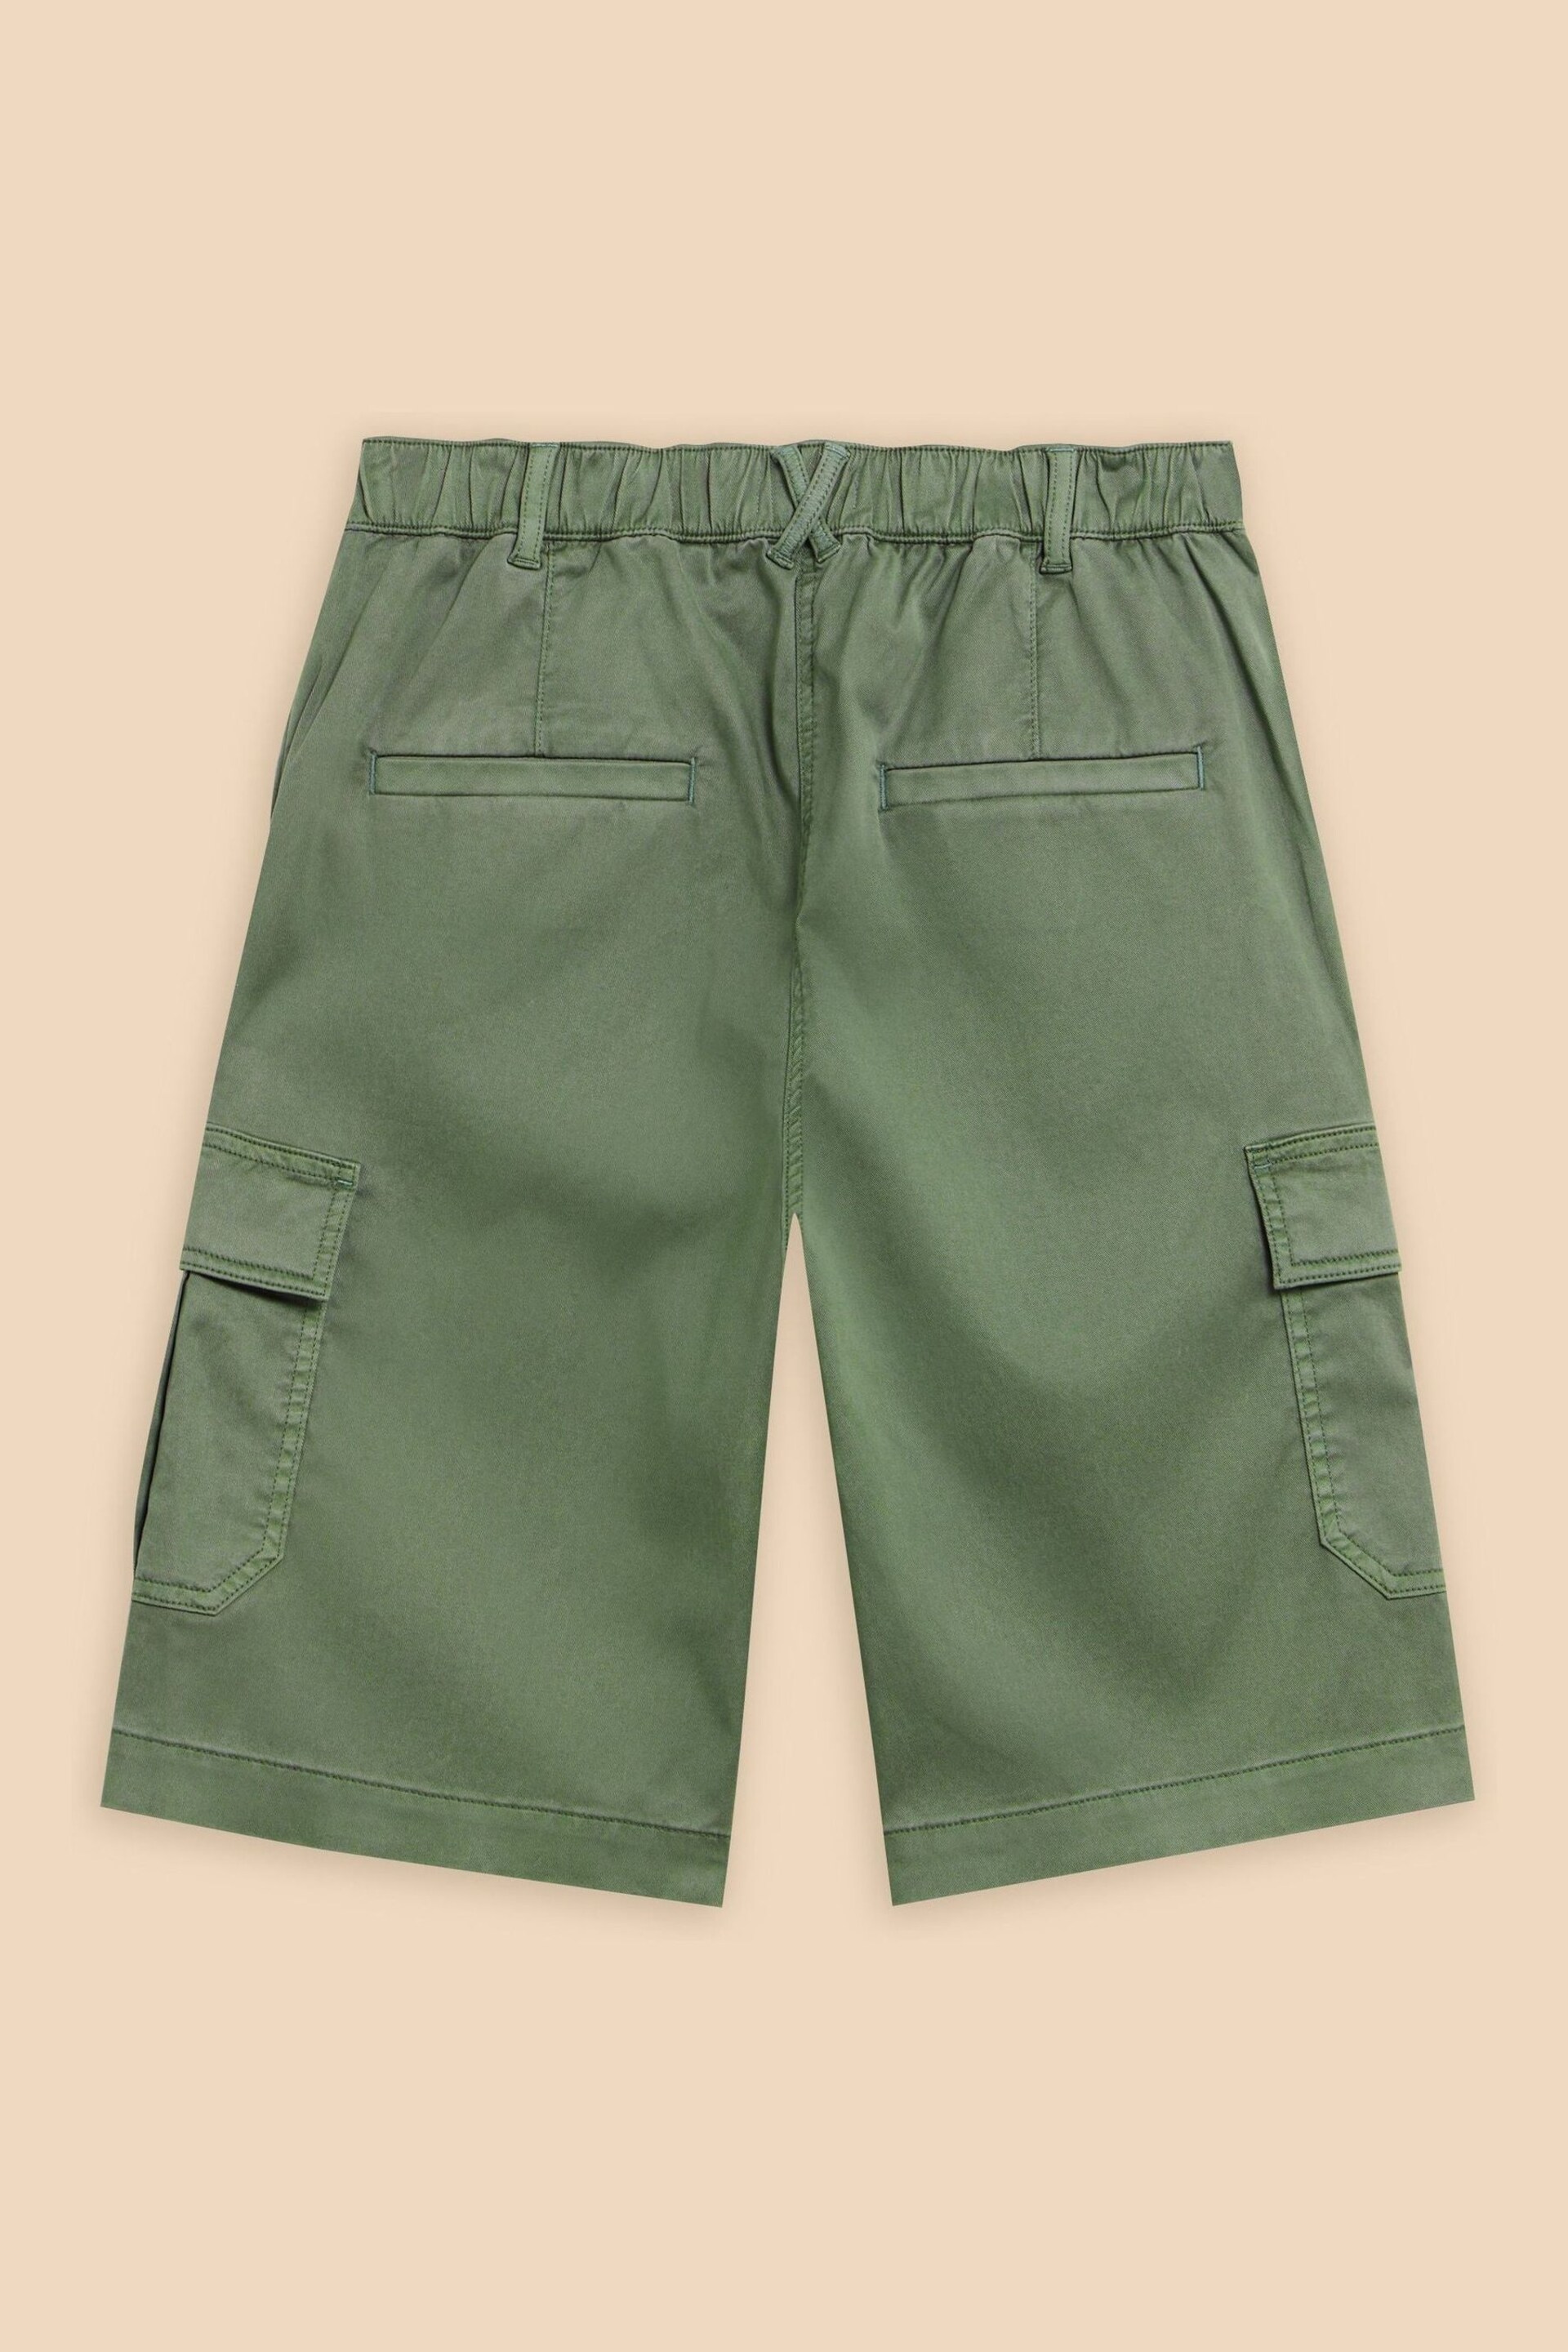 White Stuff Green Everleigh Cargo Shorts - Image 6 of 7